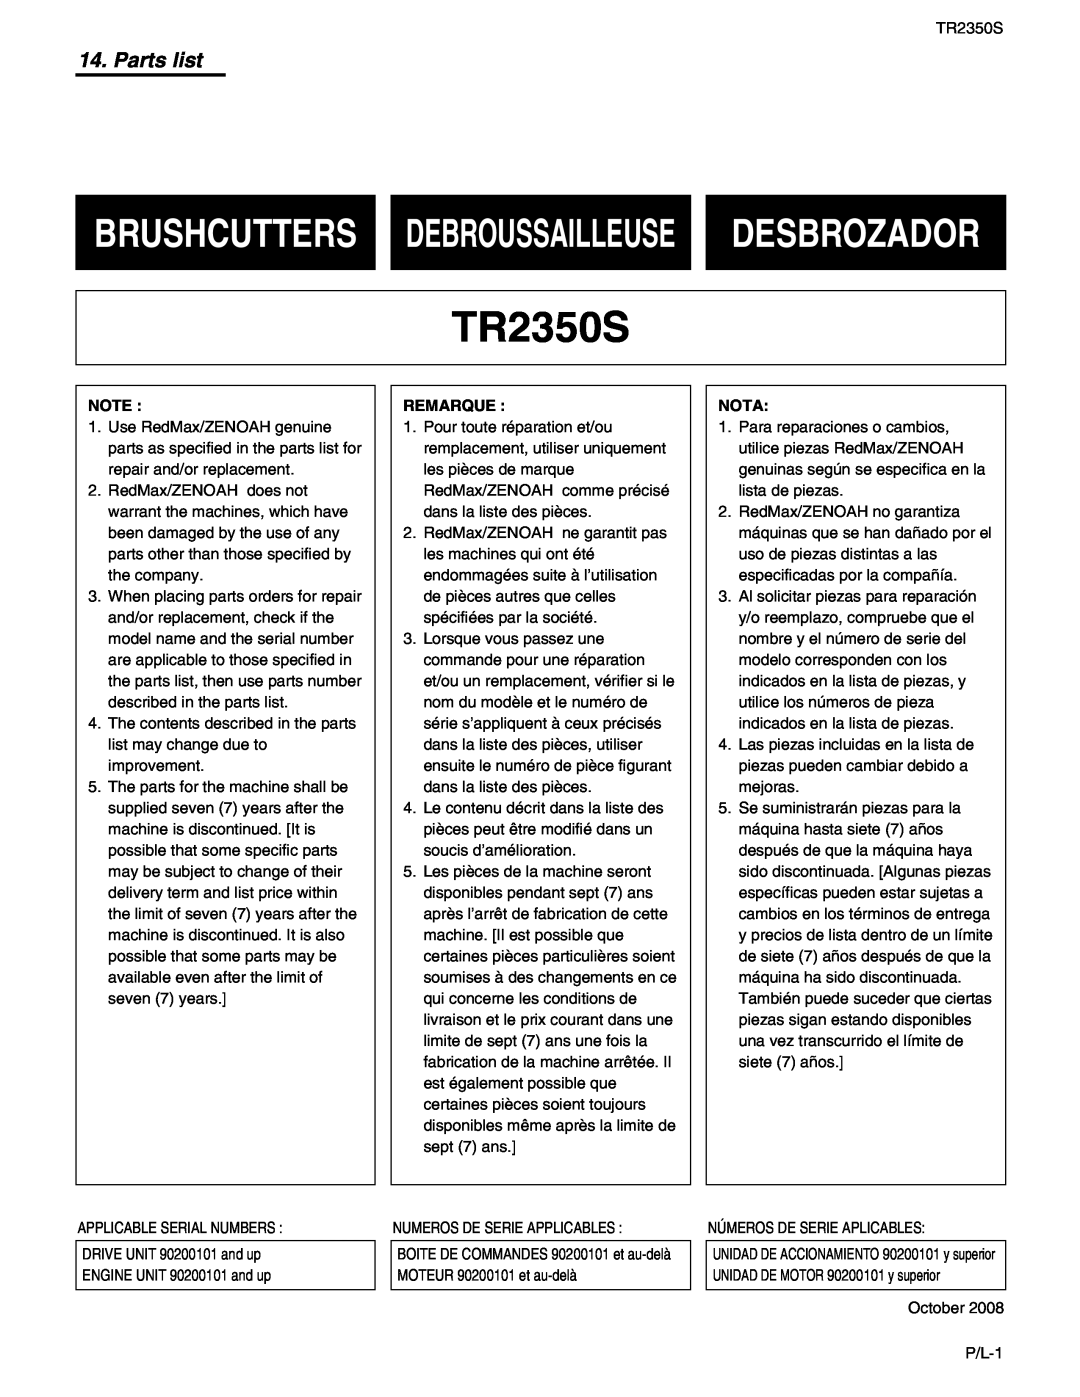 RedMax TR2350S manual Brushcutters Debroussailleuse Desbrozador, Parts list 